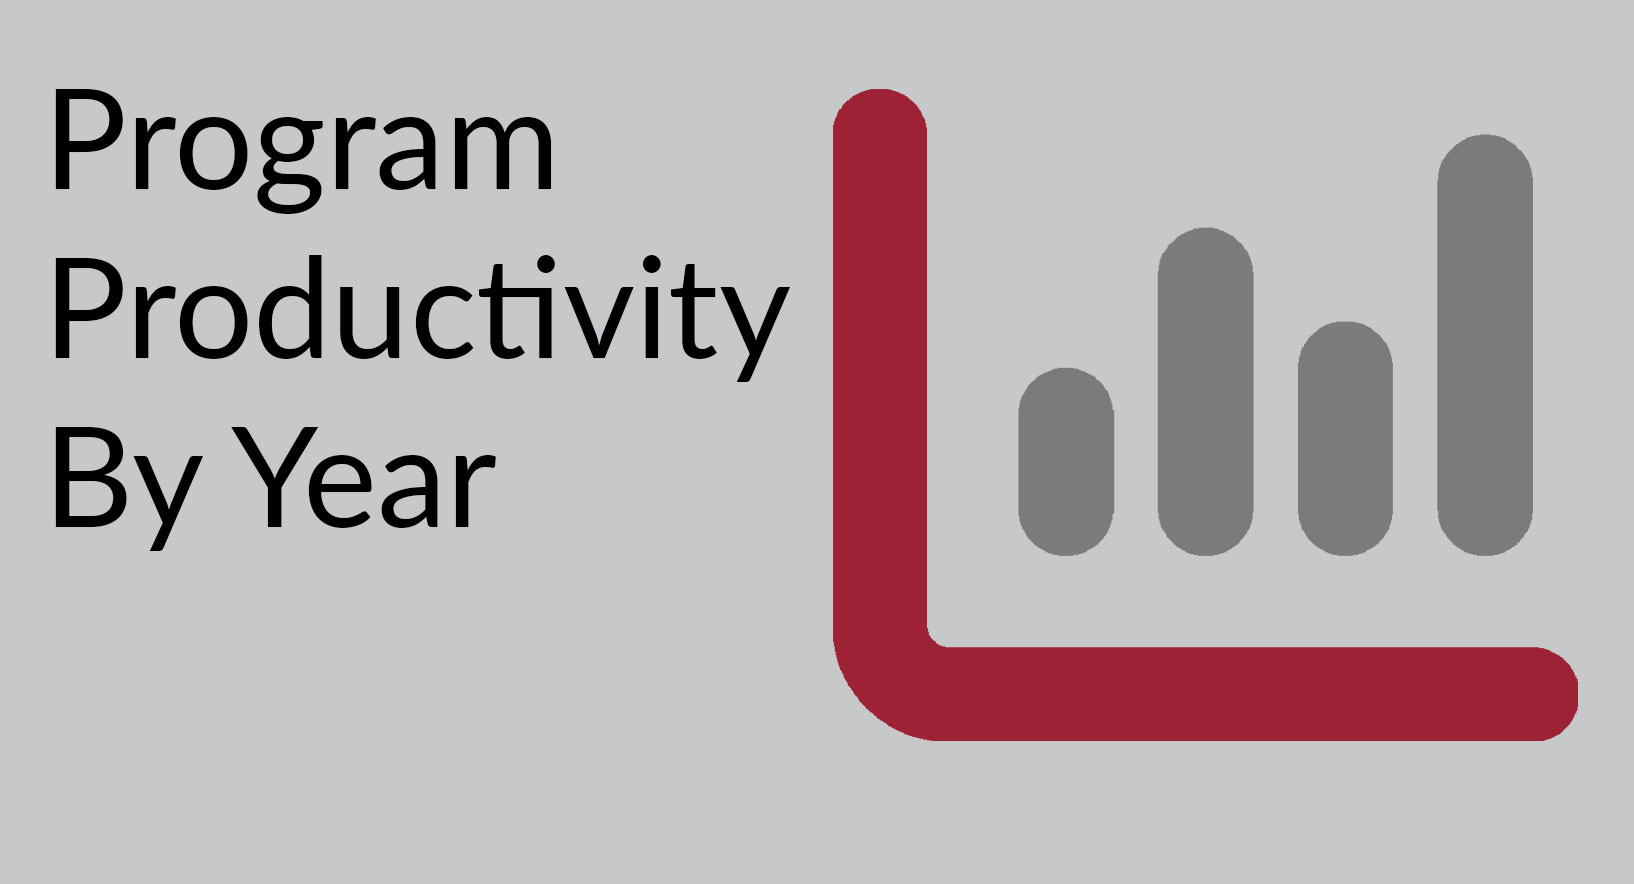 Program Productivity By Year